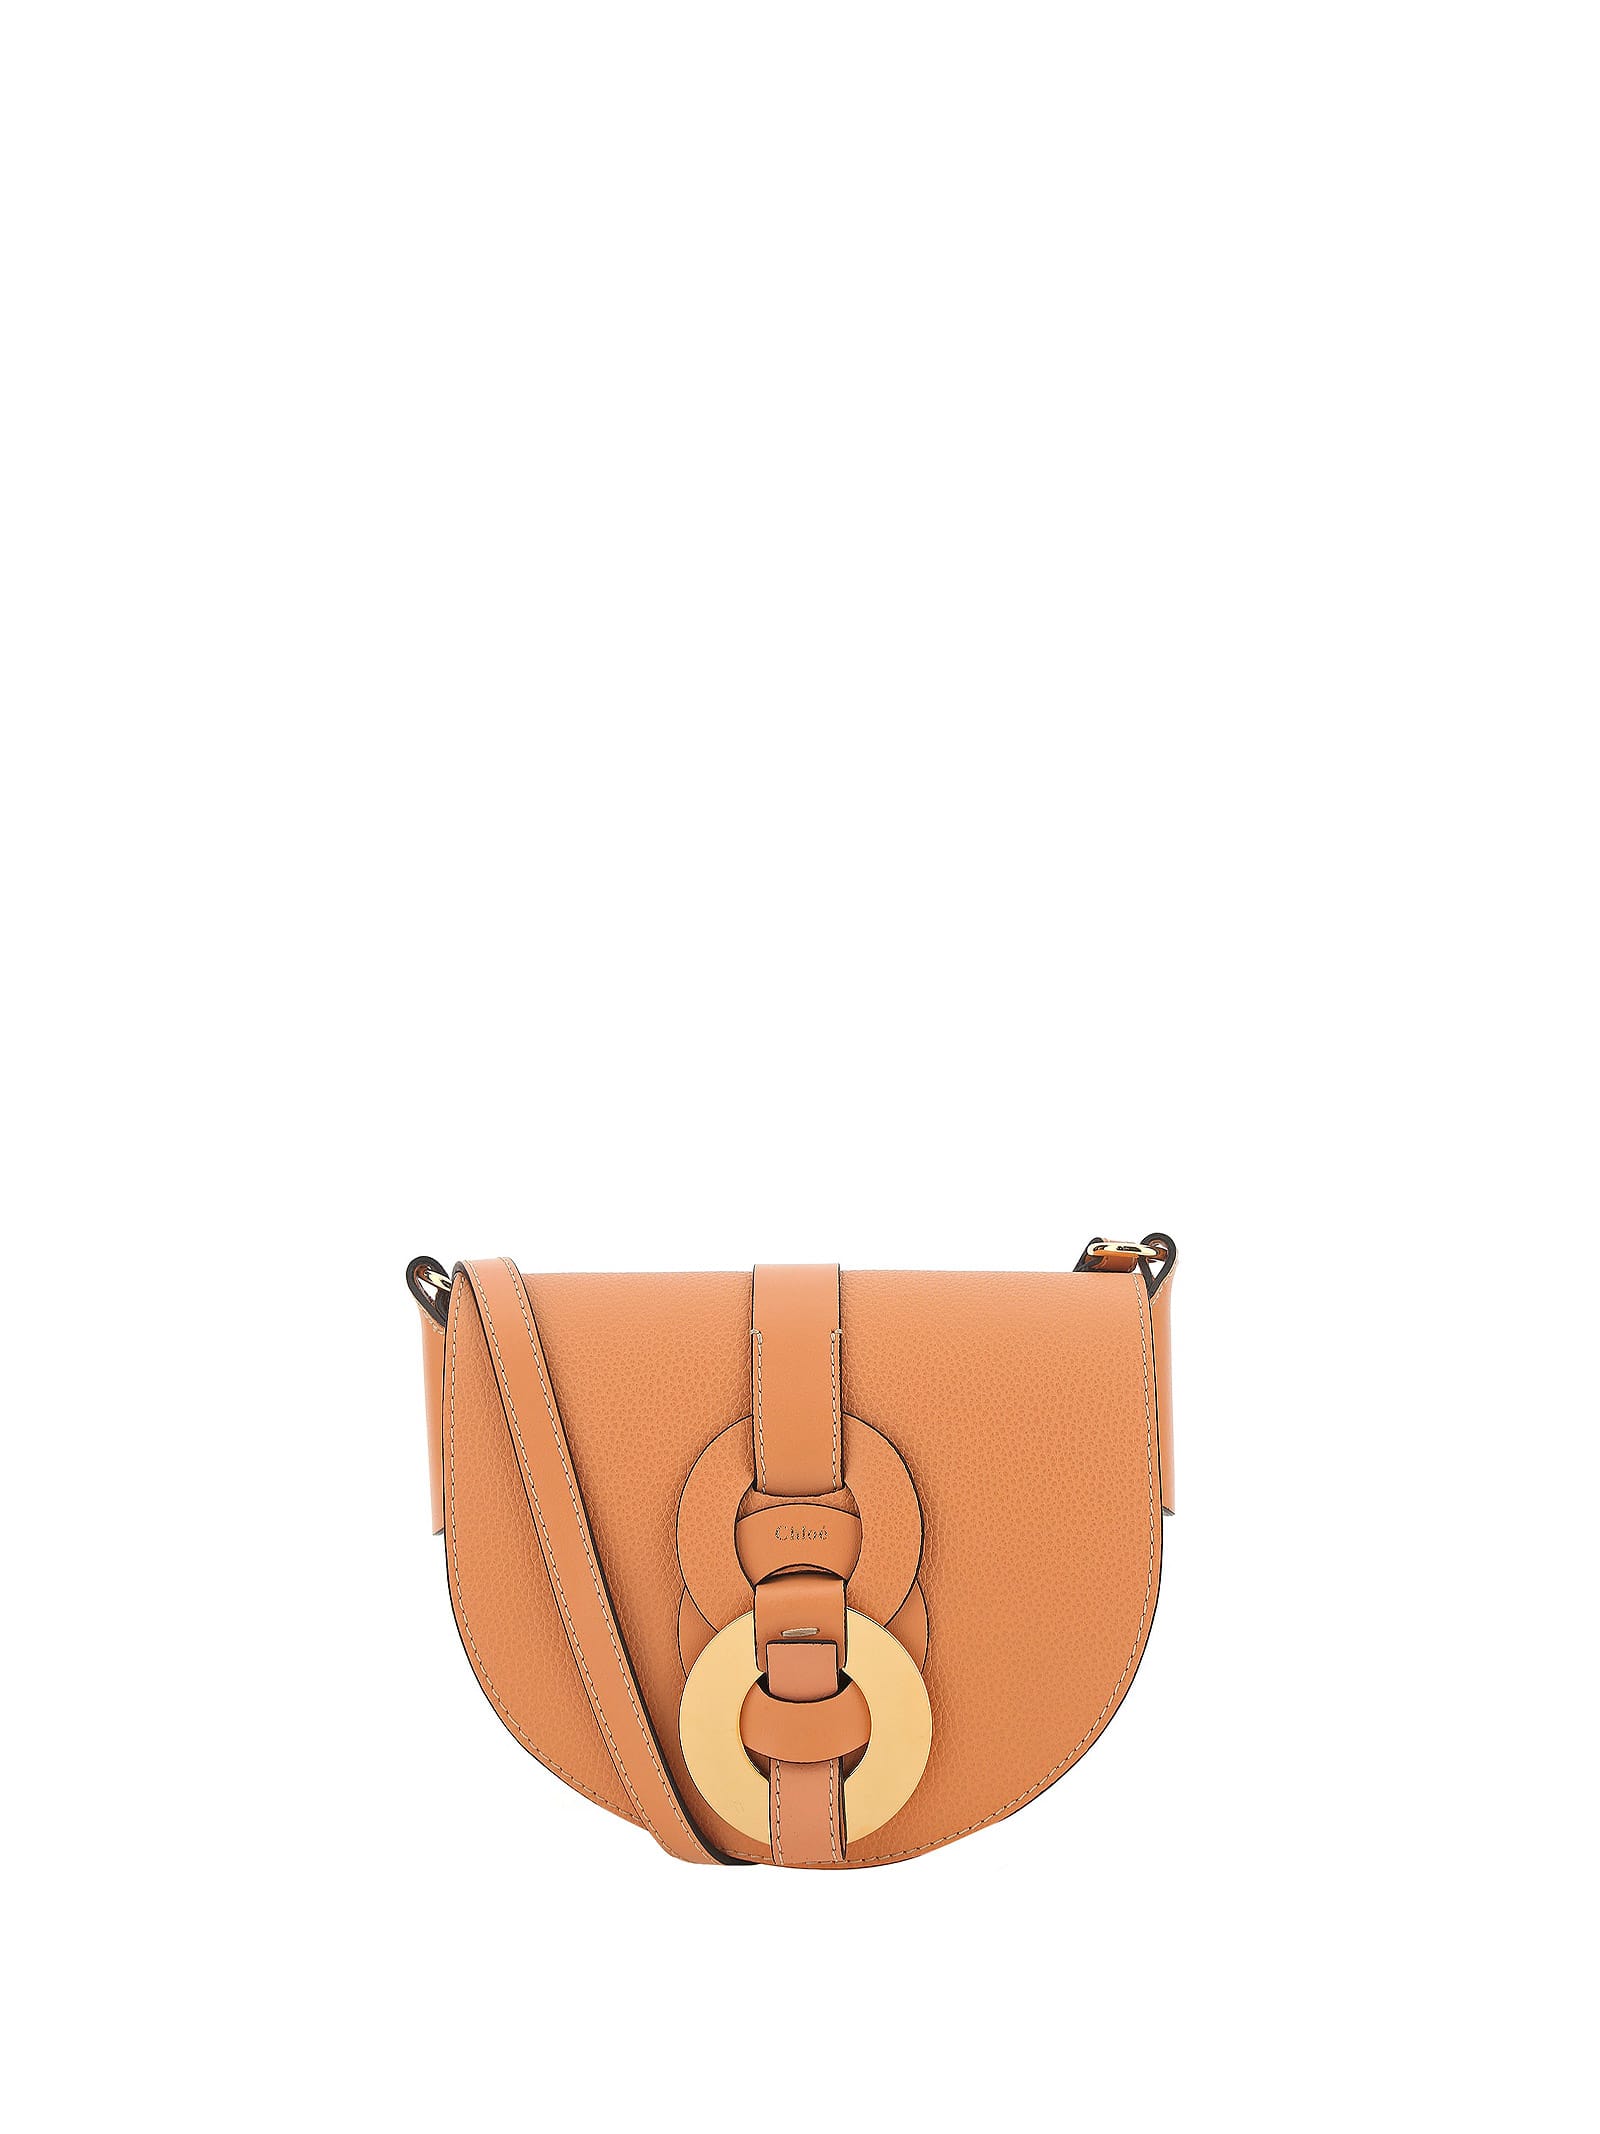 Chloé Chloé Darryl Shoulder Bag